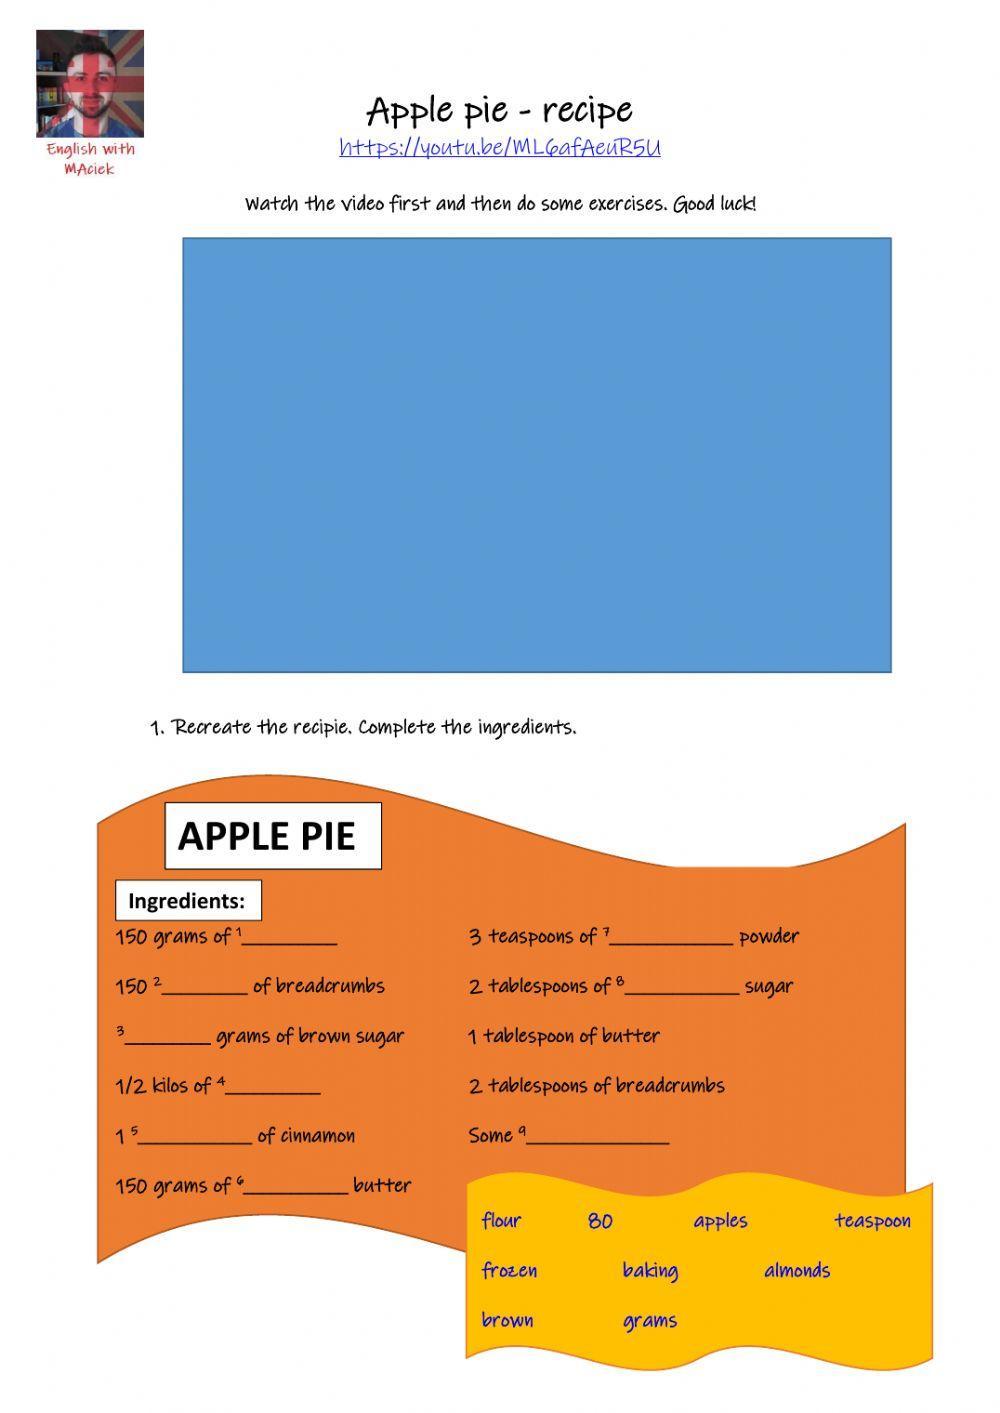 Apple pie - recipe